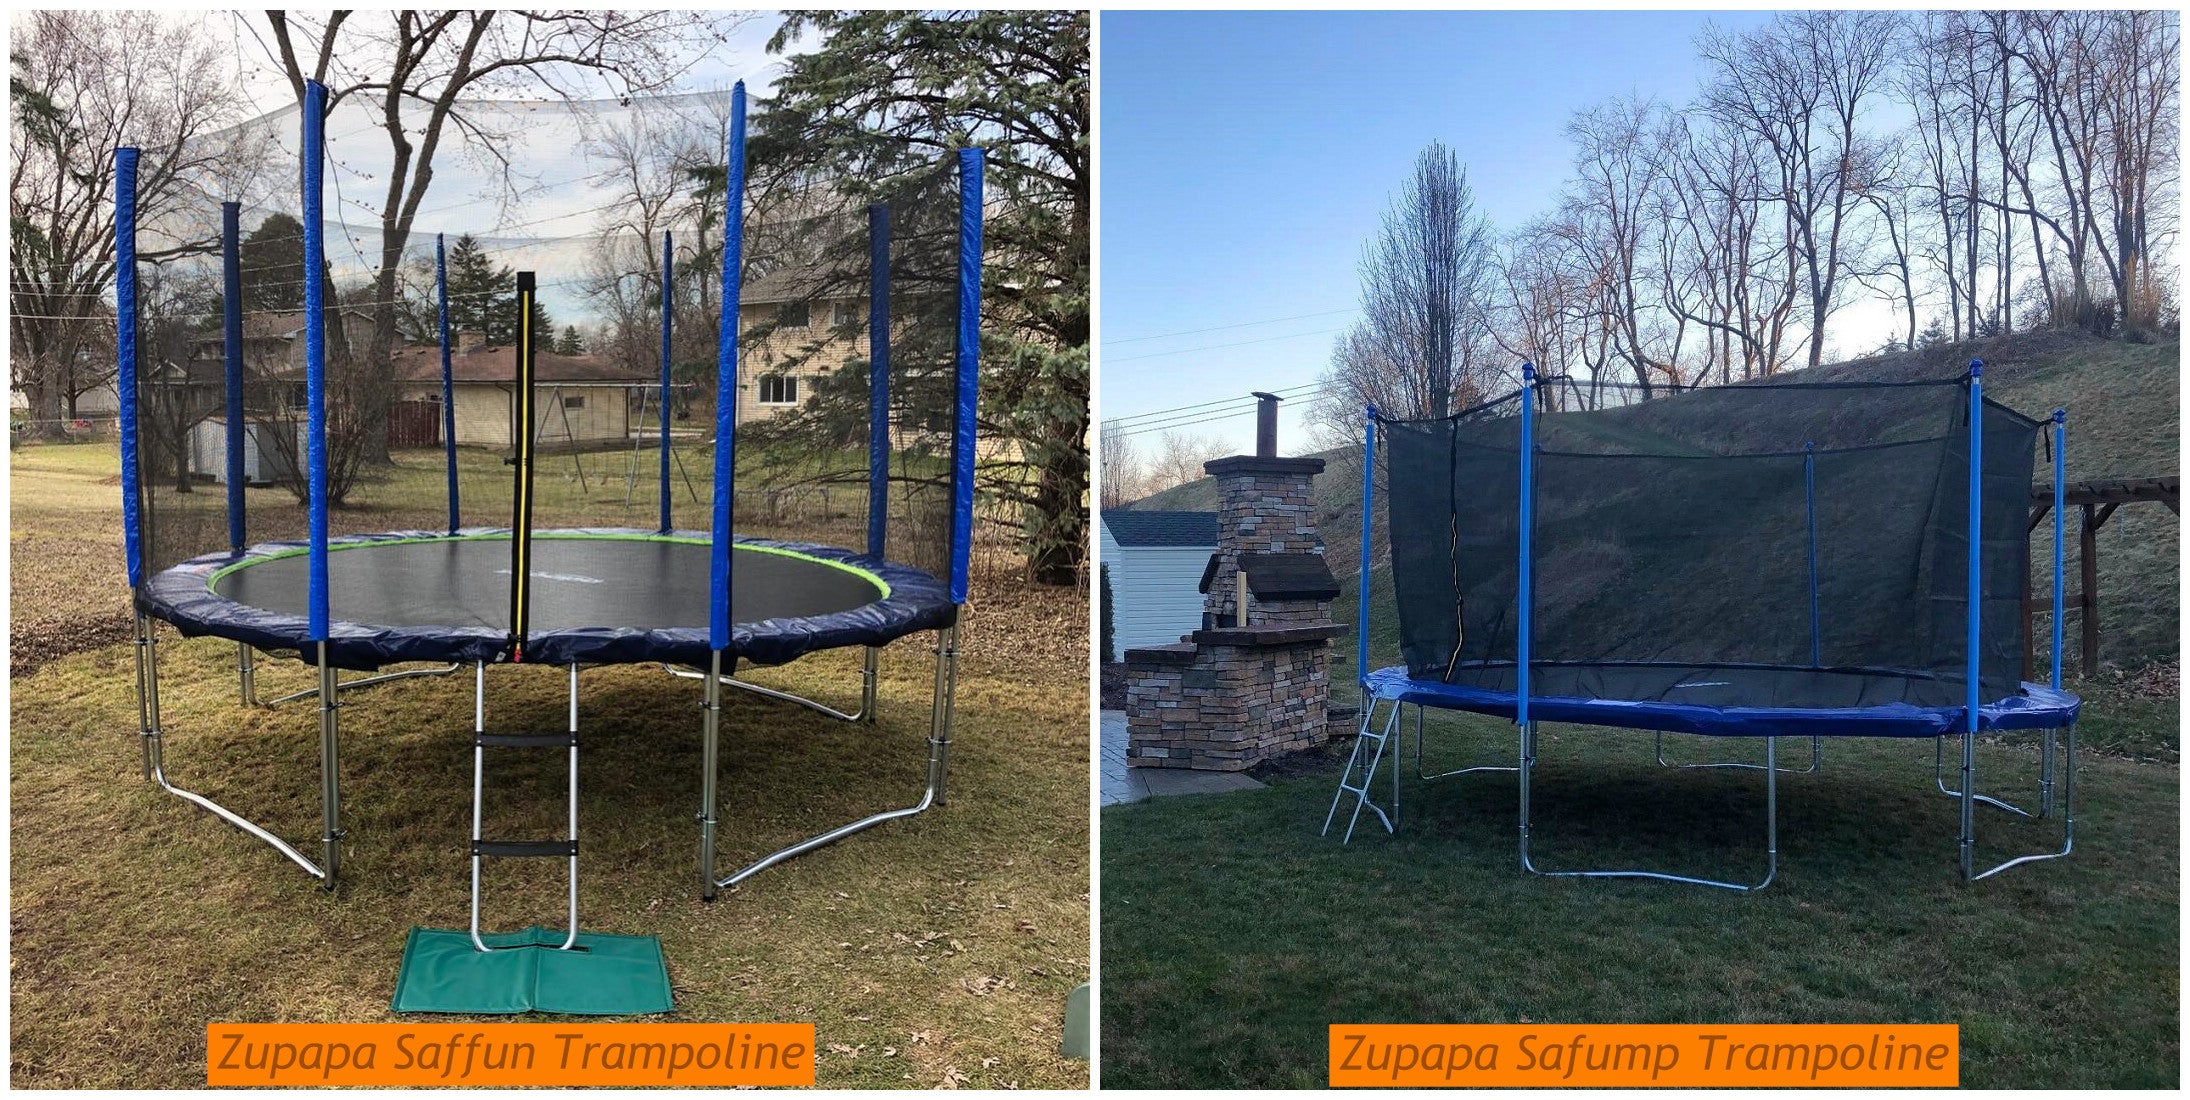 Zupapa Saffun trampoline vs. Zupapa Safump trampoline. Zupapa outdoor trampolines in 2021 spring.